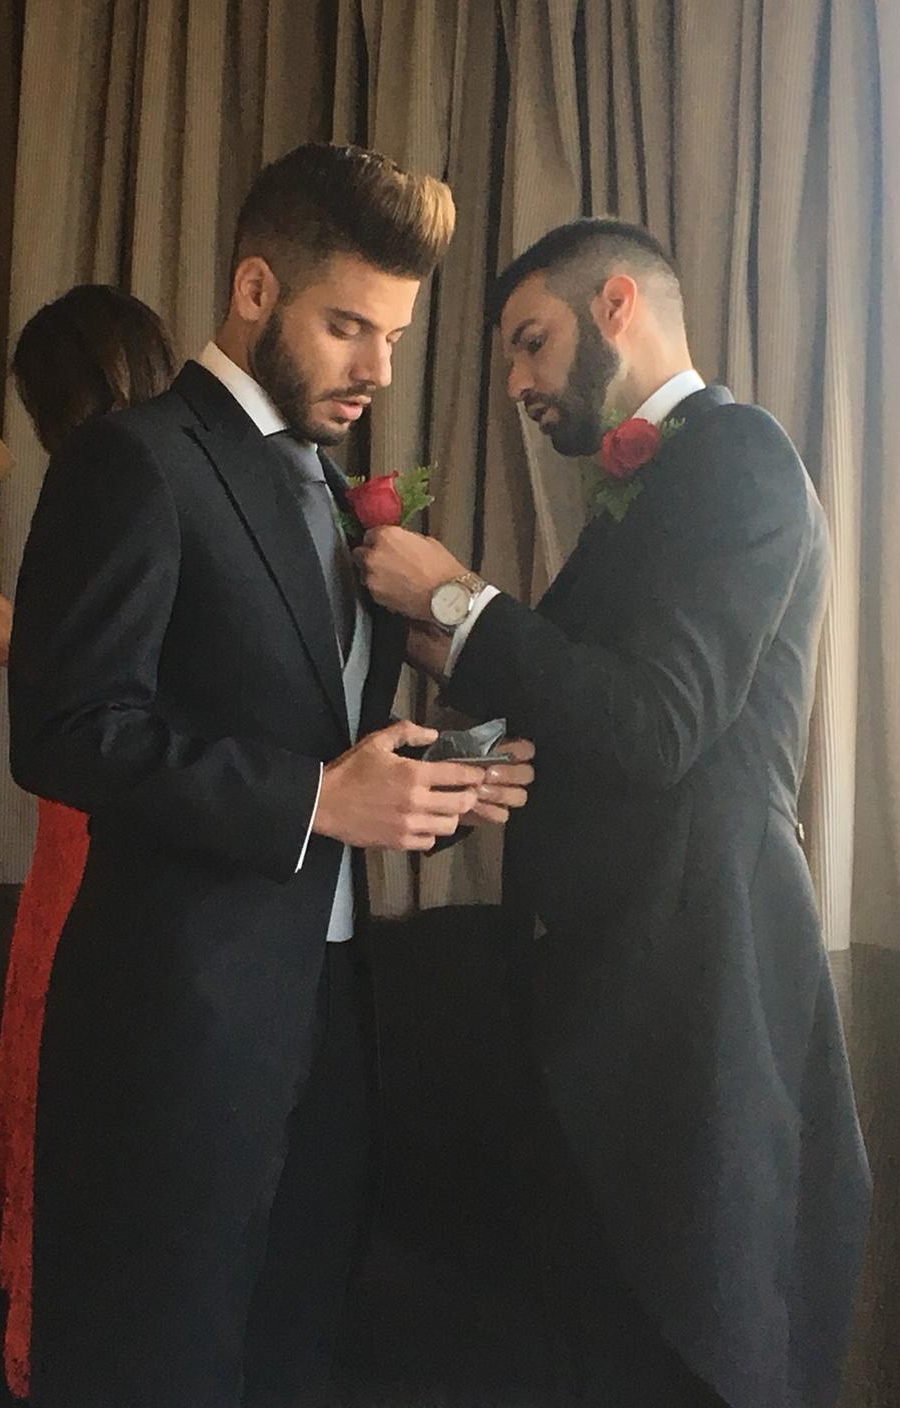 La romántica boda de Iván Martínez (LGTBIpol) y Ronald Bravo en Madrid